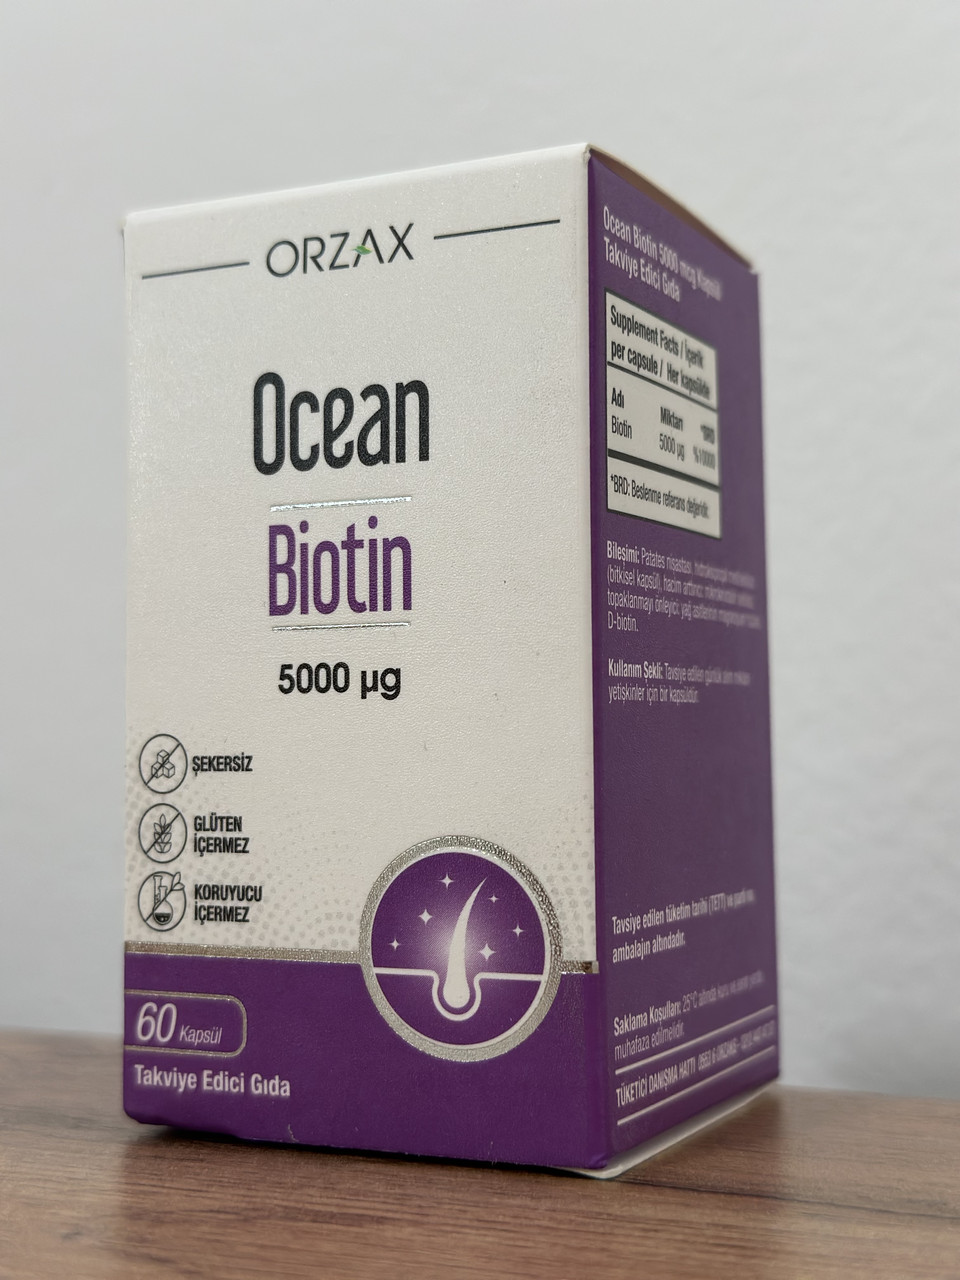 ORZAX Ocean Biotin, Биотин, 60 капсул